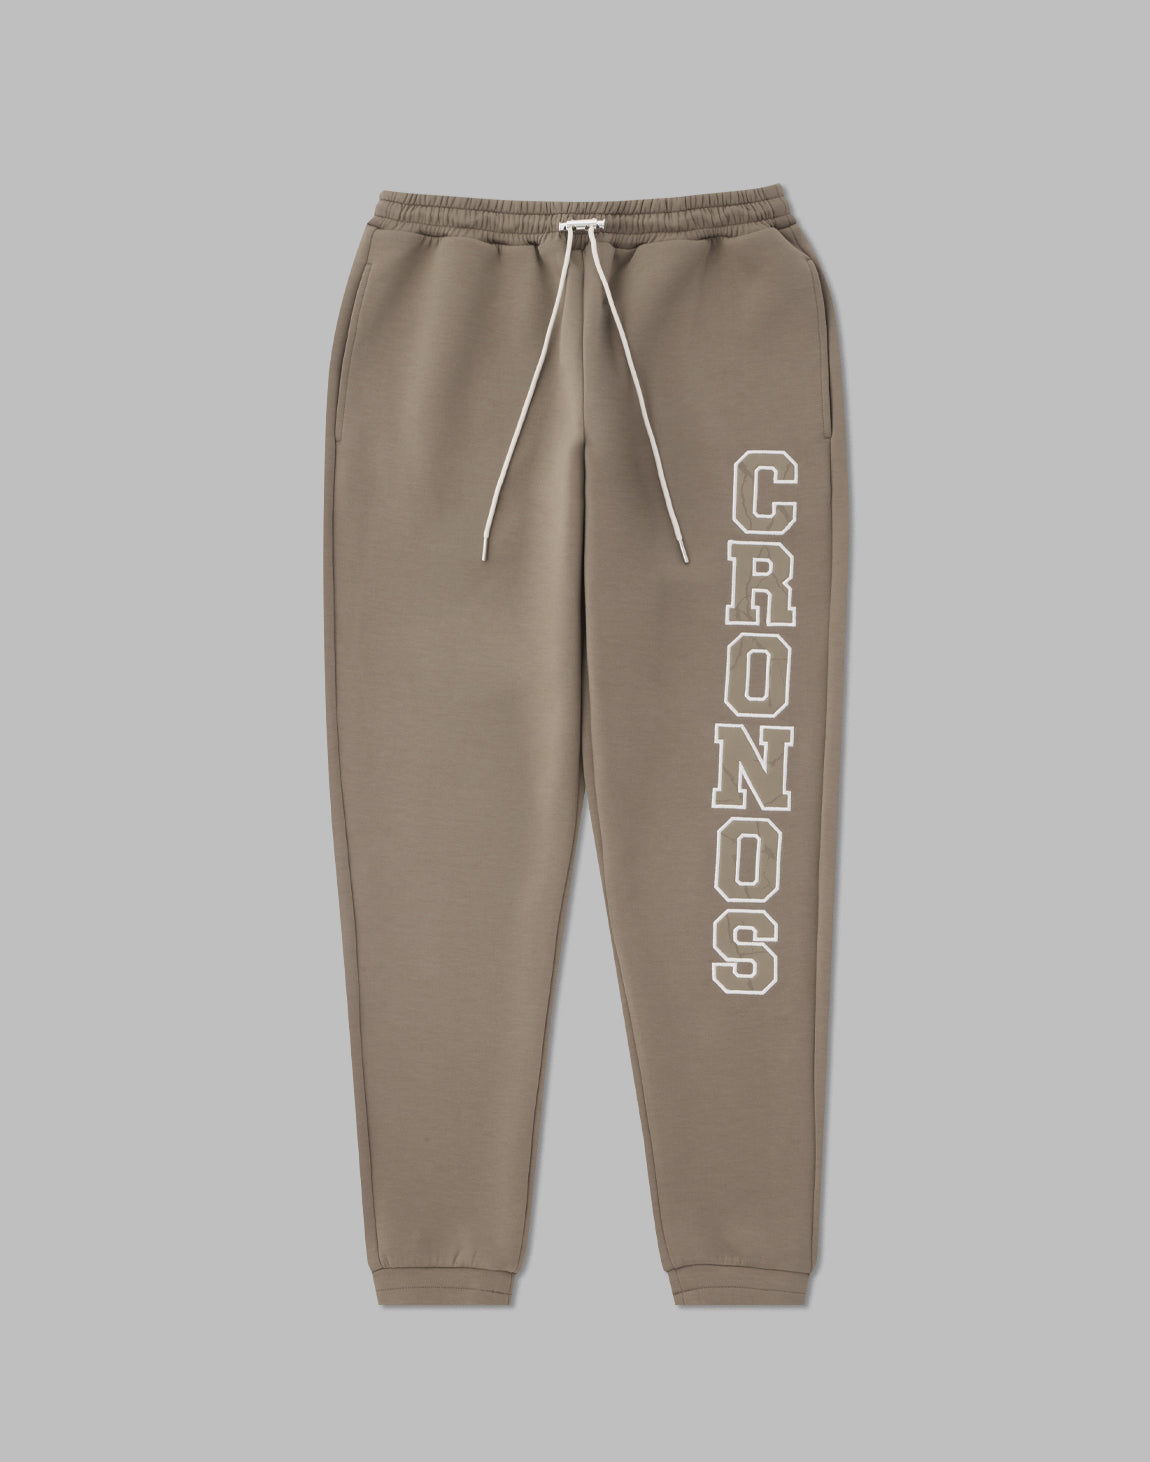 CRONOS STITCH LOGO LONGPANTS – クロノス CRONOS Official Store